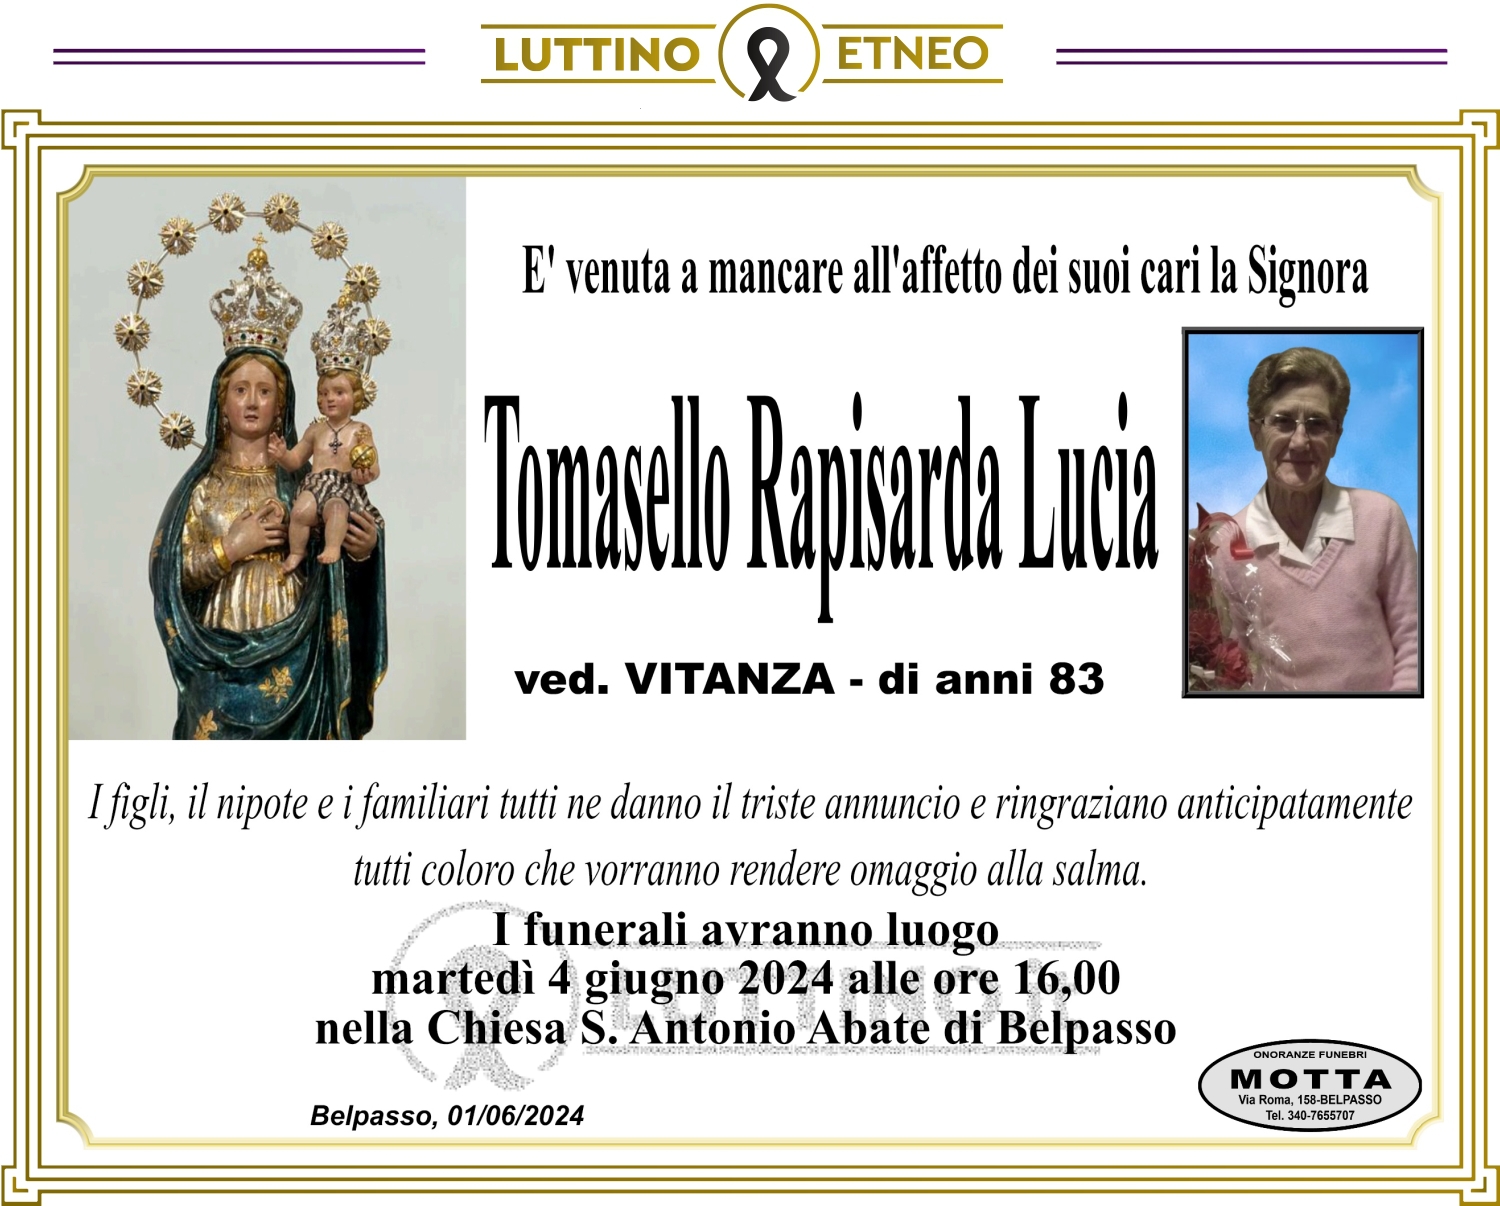 Lucia Tomasello Rapisarda